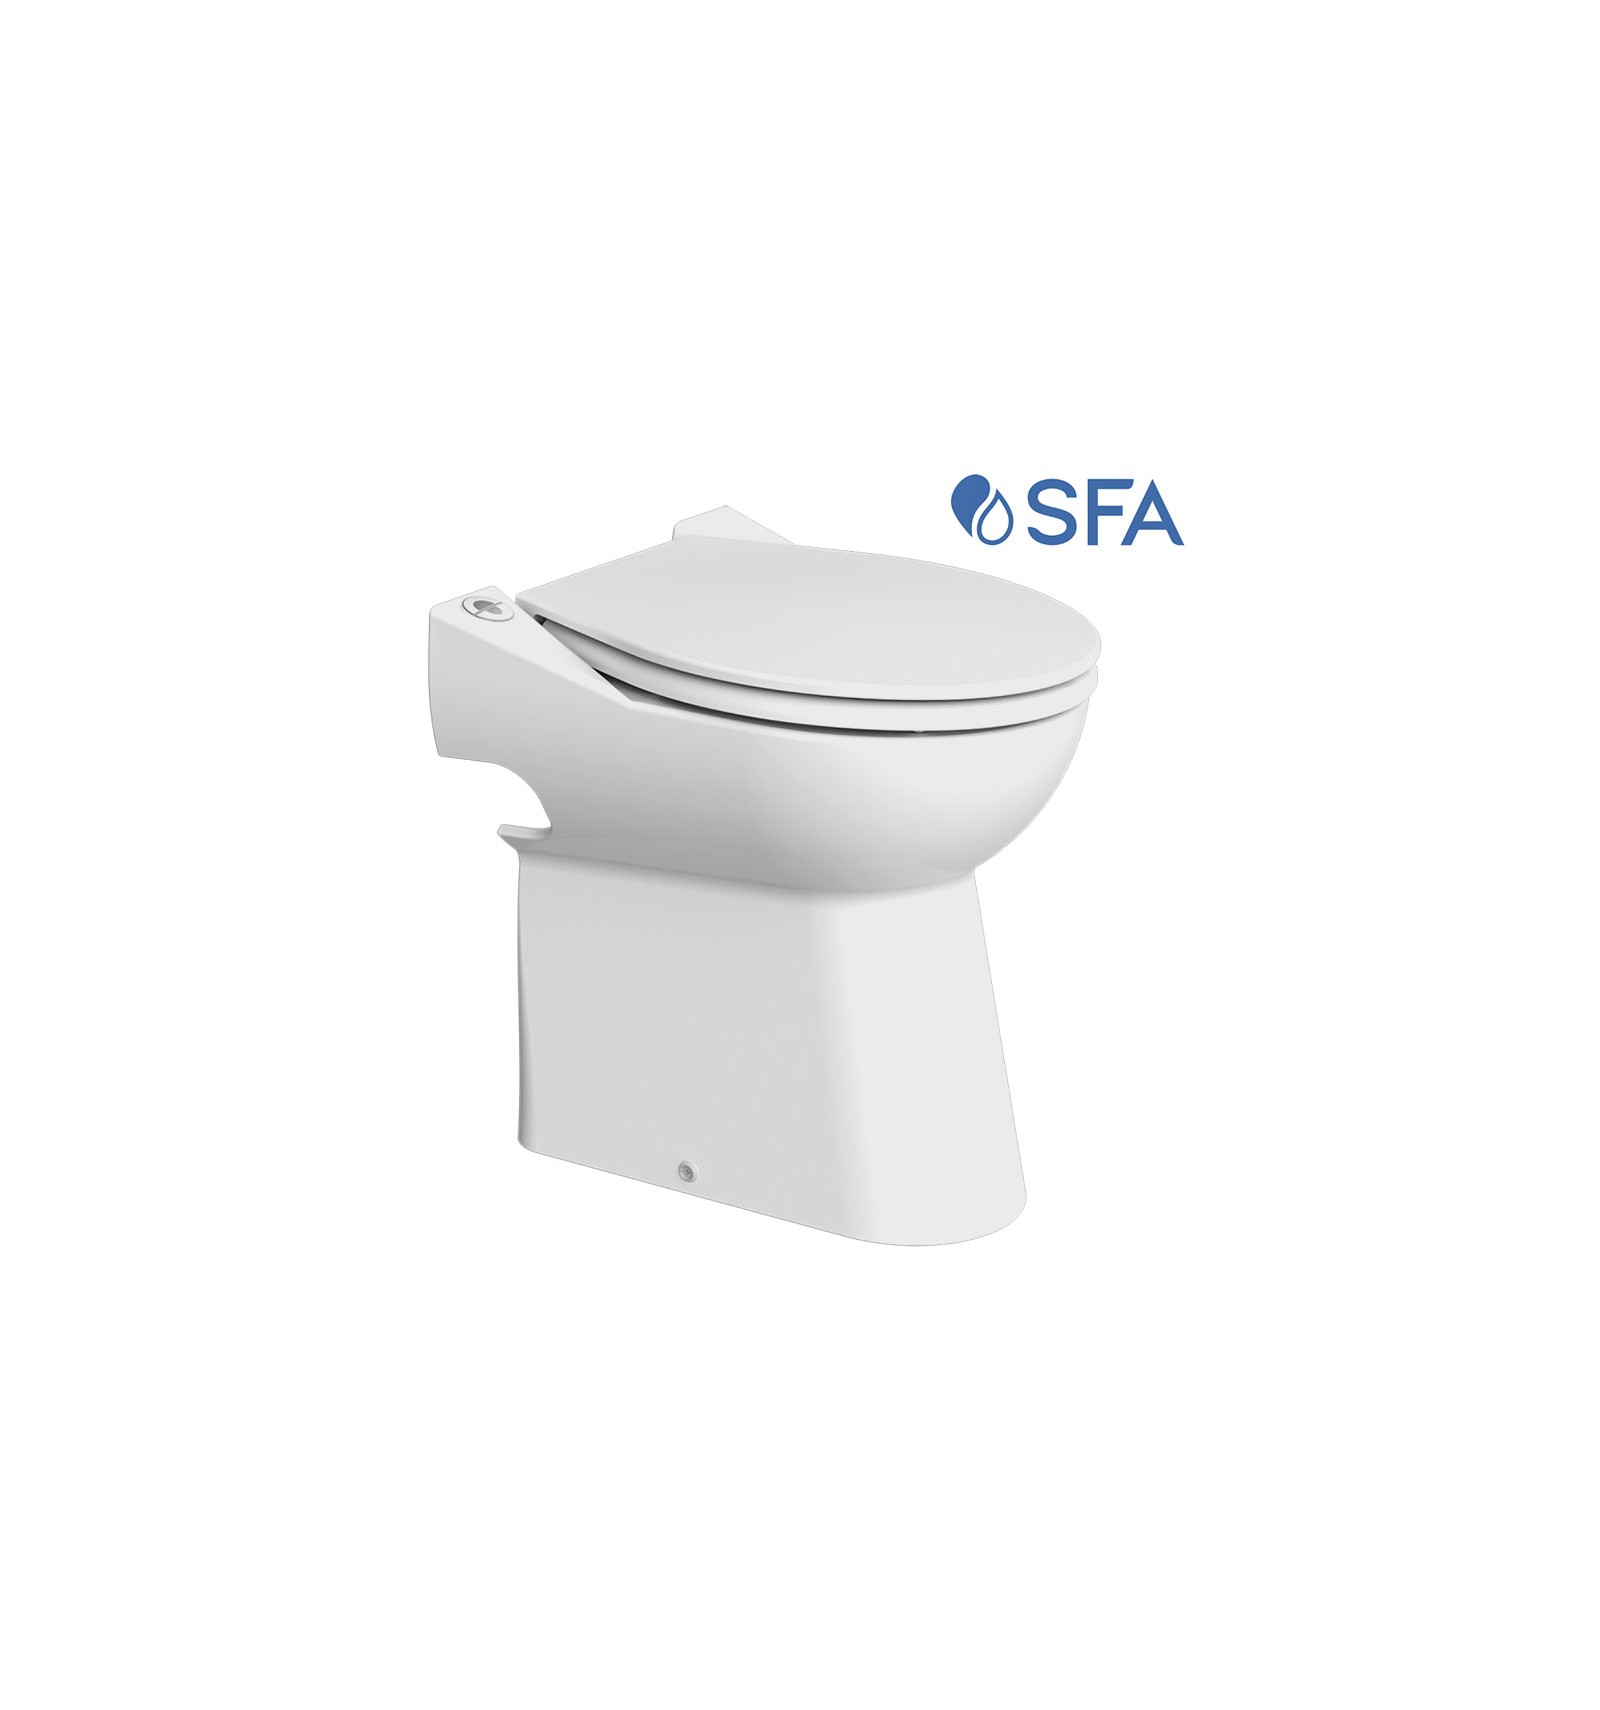 SFA Sanicompact C43 - WC broyeur intégré - www.europalamp.com